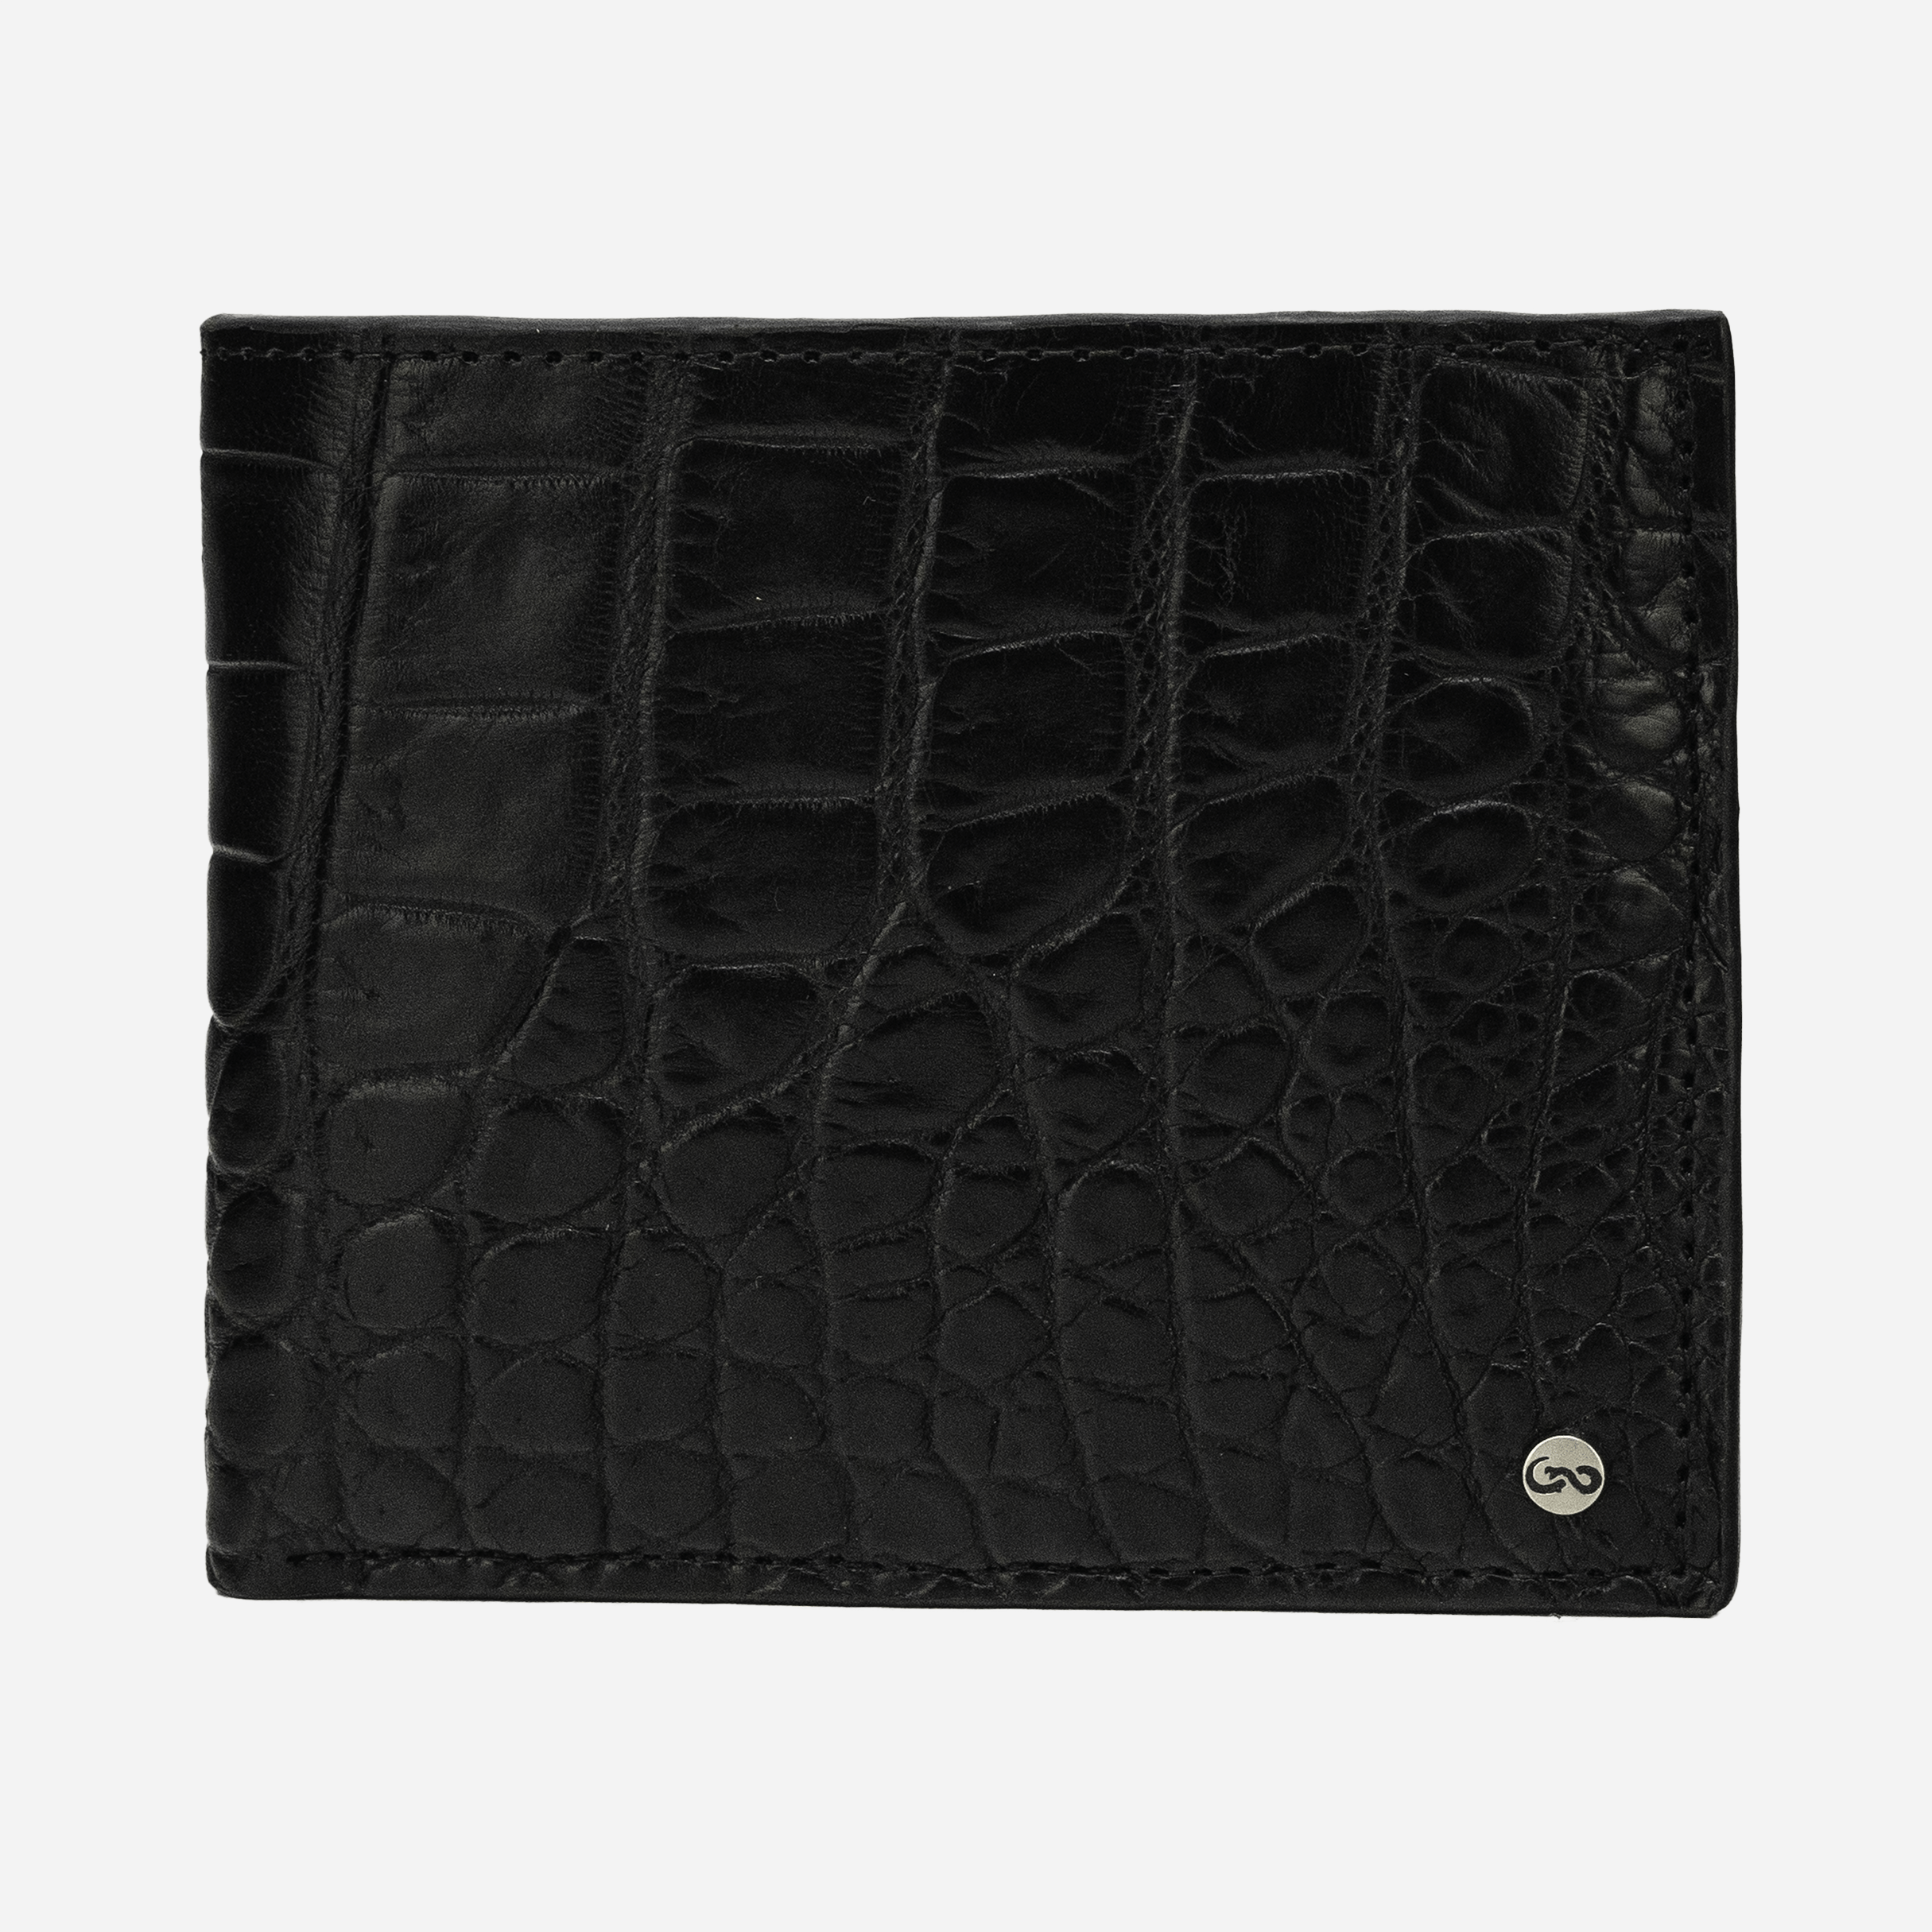 Veneno Leather Goods Cartera Grande "The Ambassador" - Billionaire Croc Black